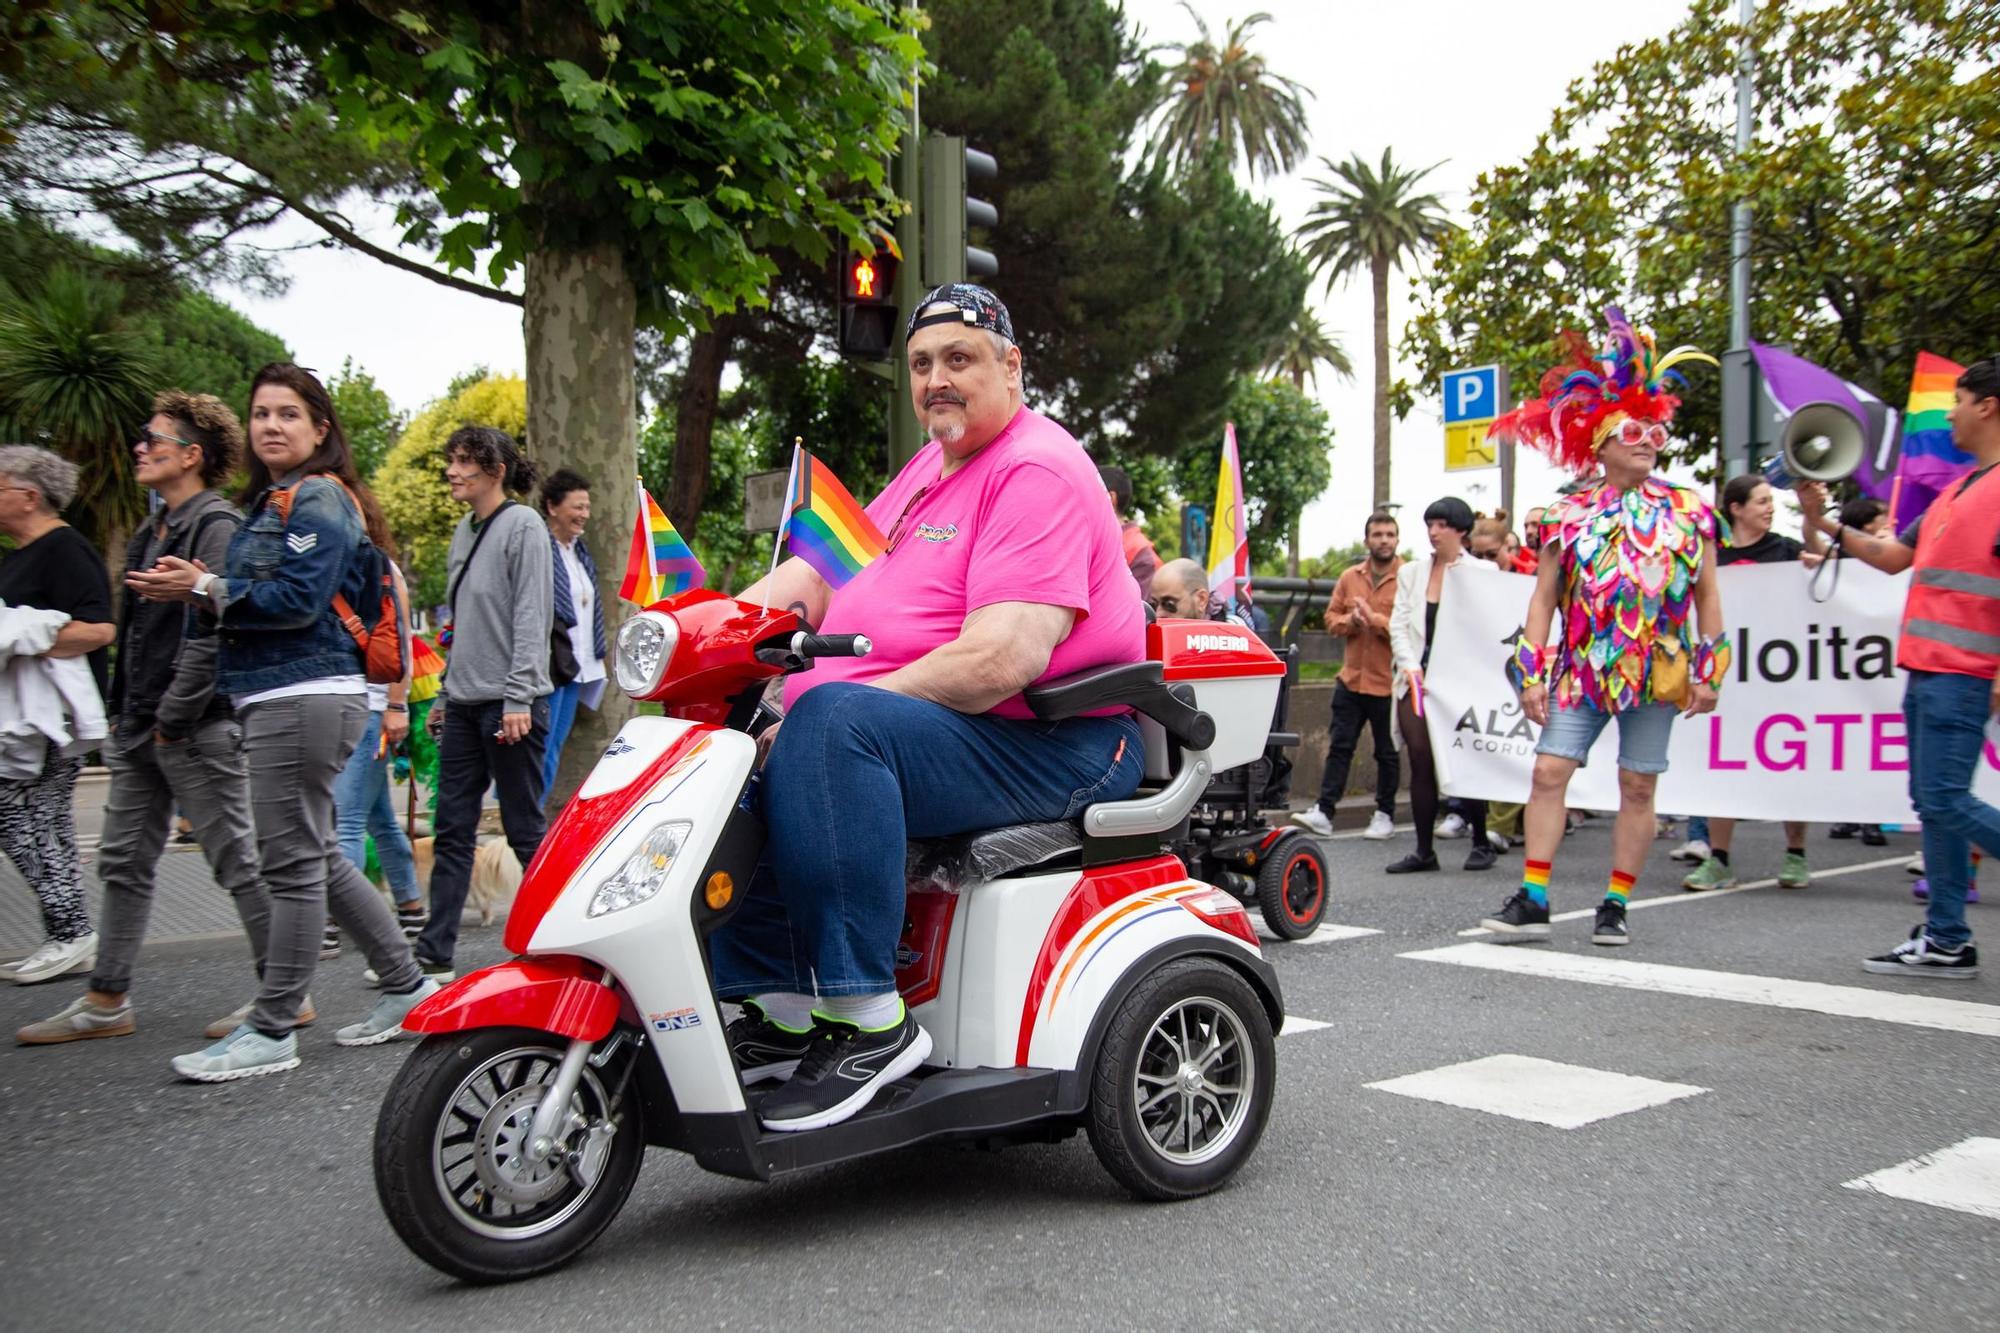 La marcha del Orgullo LGTBI recorre las calles de A Coruña